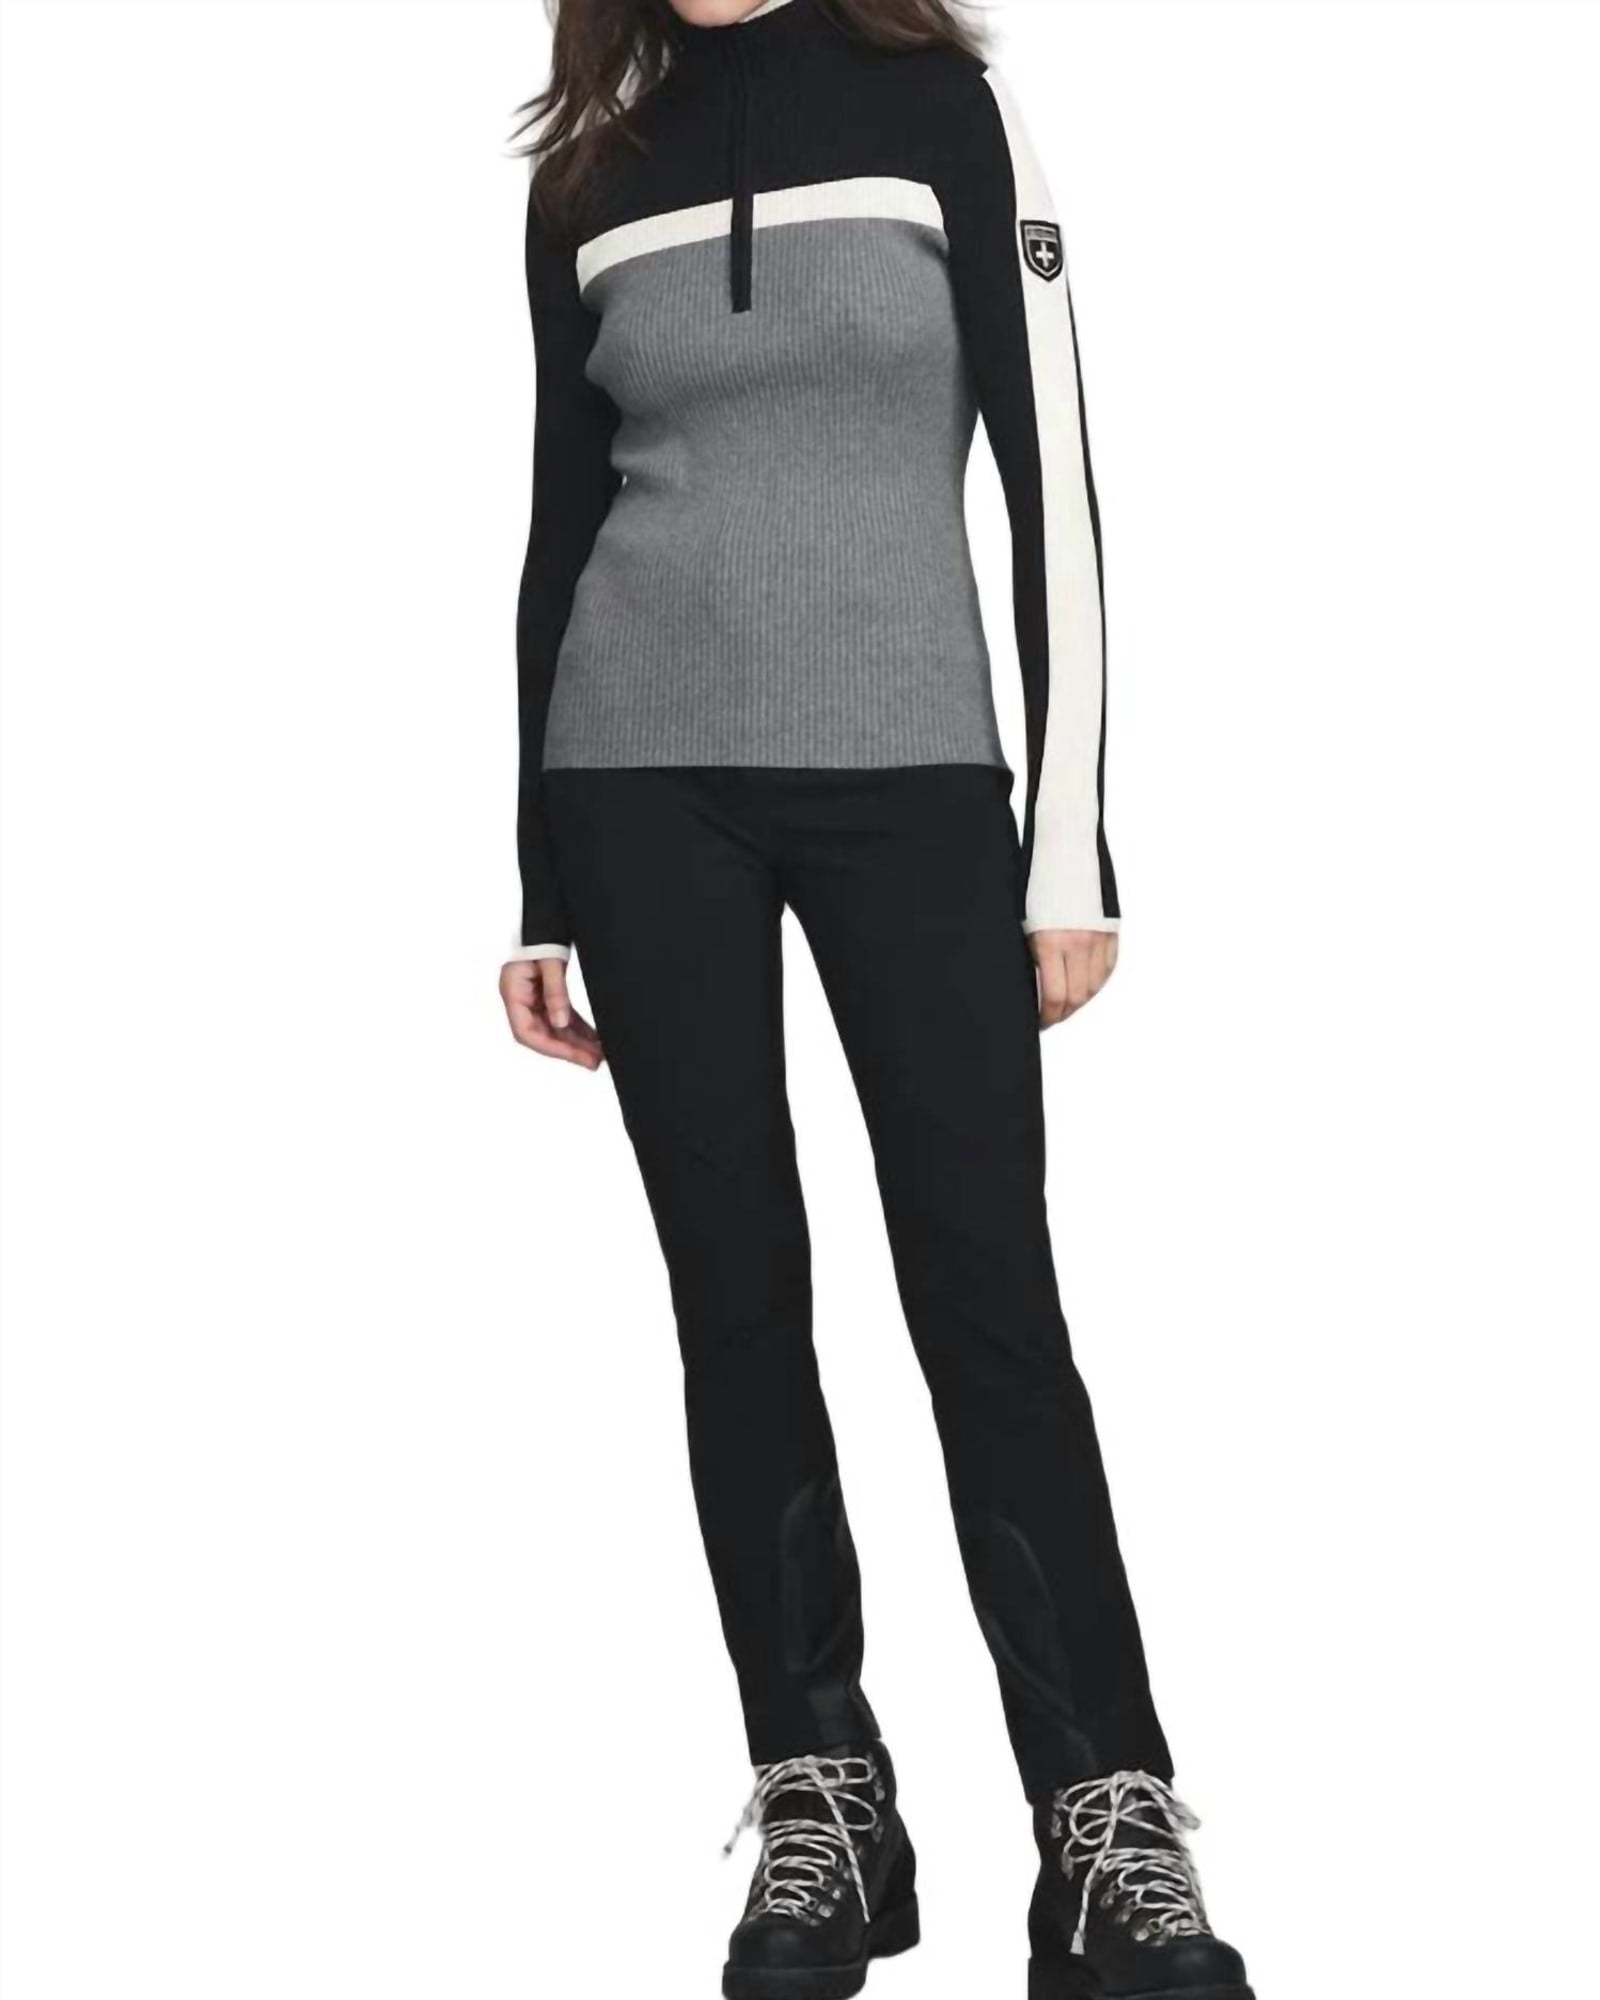 Ali Ll Half -Zip Sweater in Heather Grey | Heather Grey